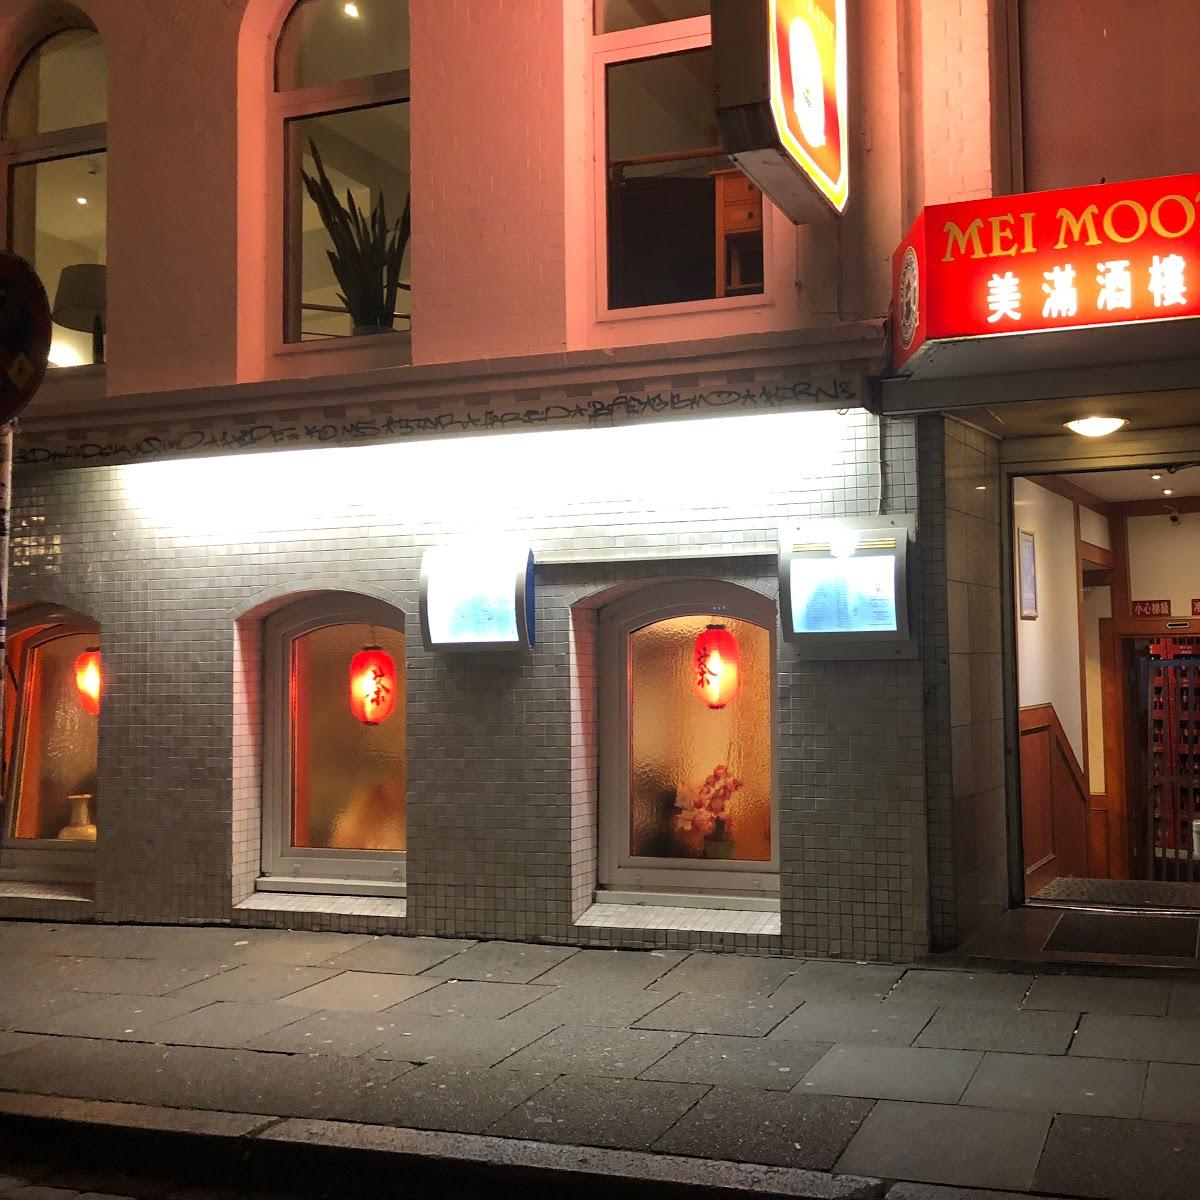 Restaurant "Mei Moon" in Hamburg